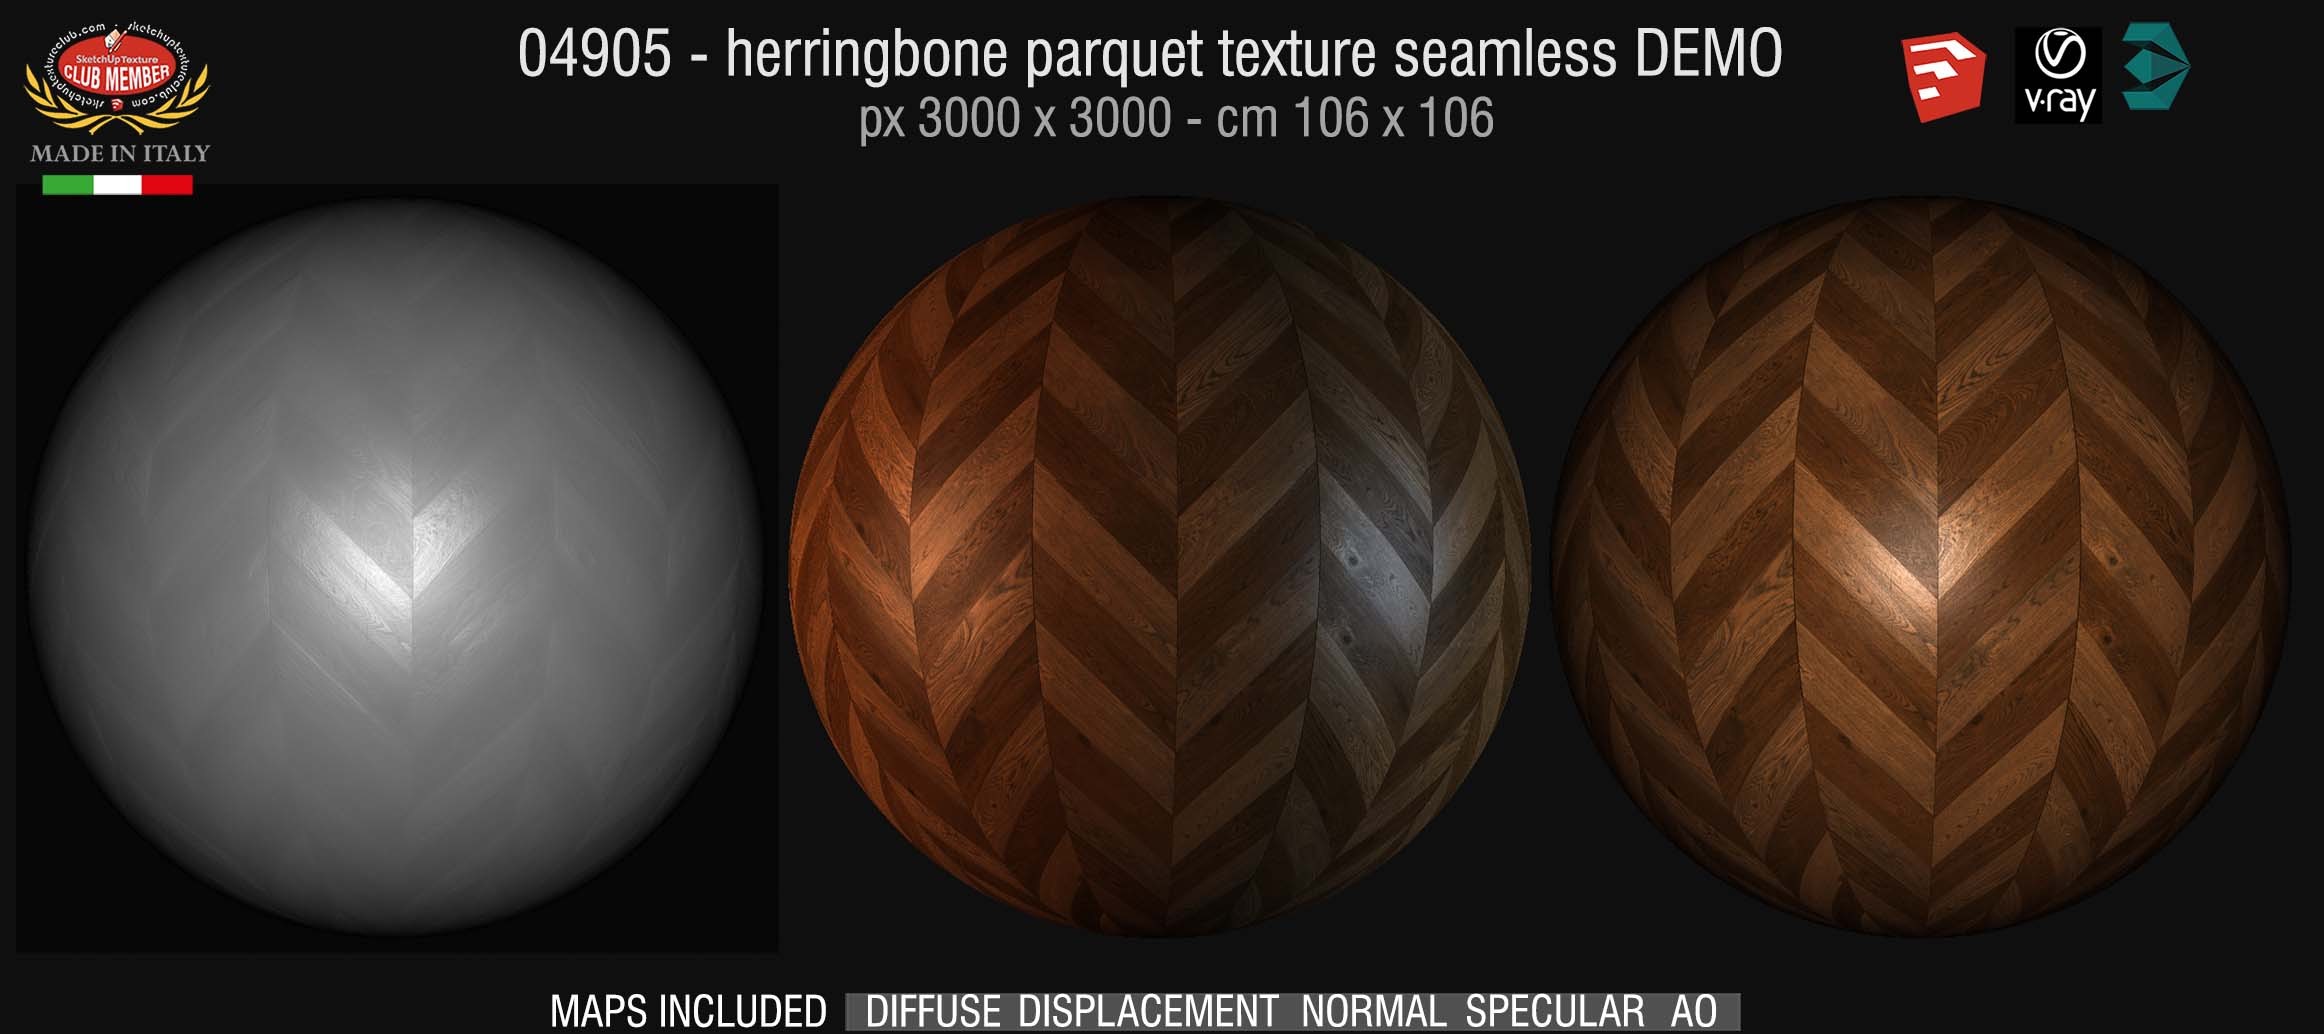 04905 HR Herringbone parquet texture seamless + maps DEMO